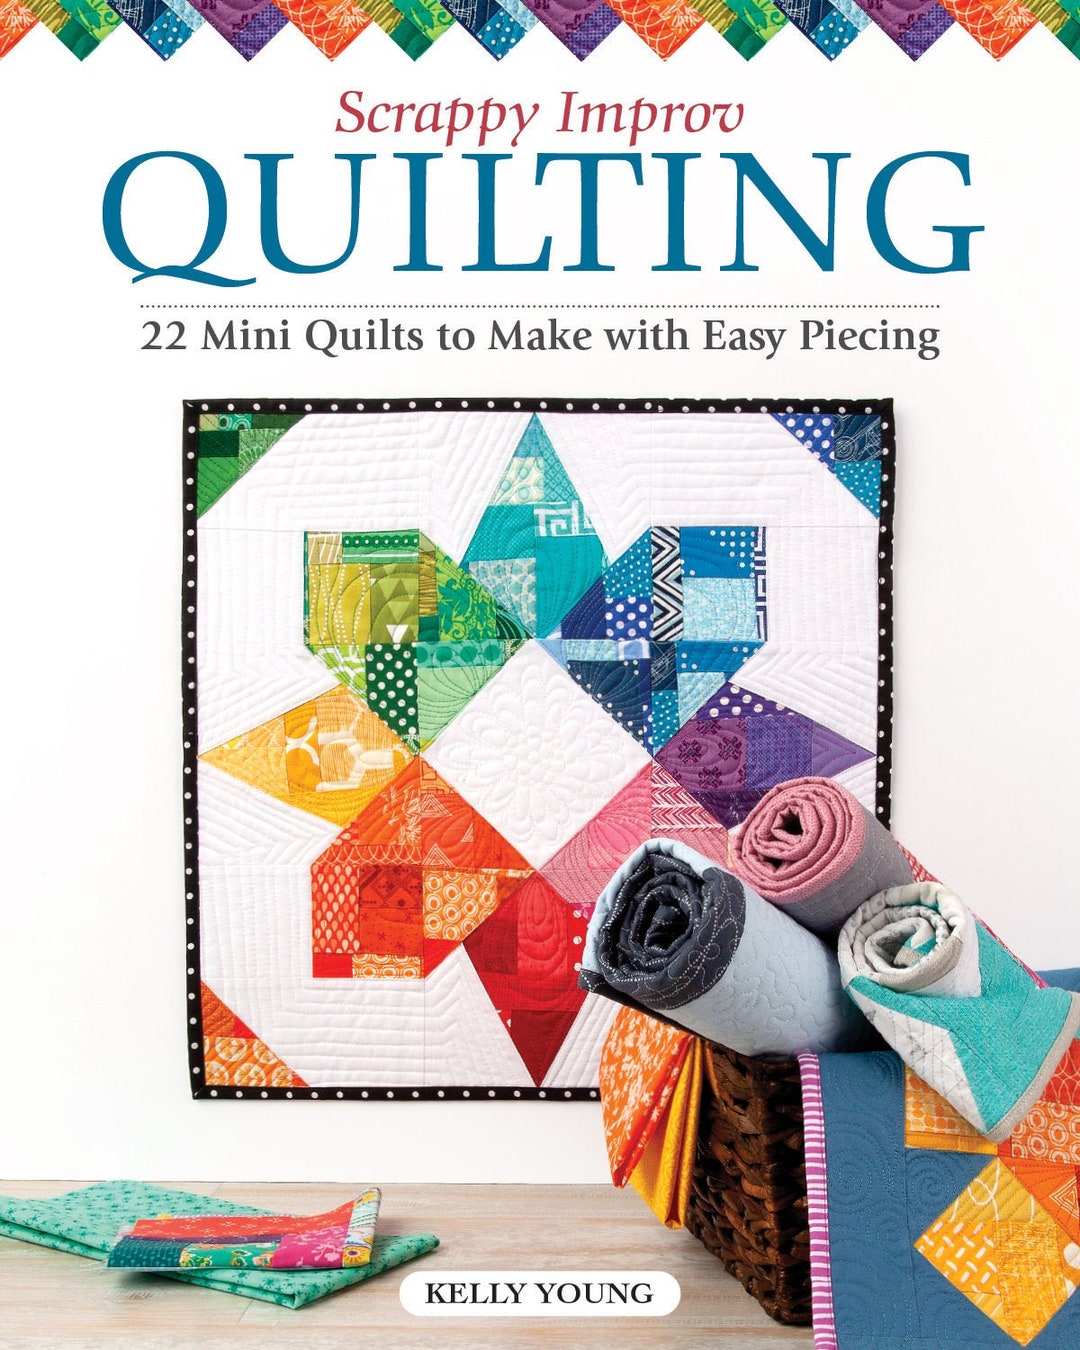 Improv Paper Piecing: A Modern Approach to Quilt Design [Book]